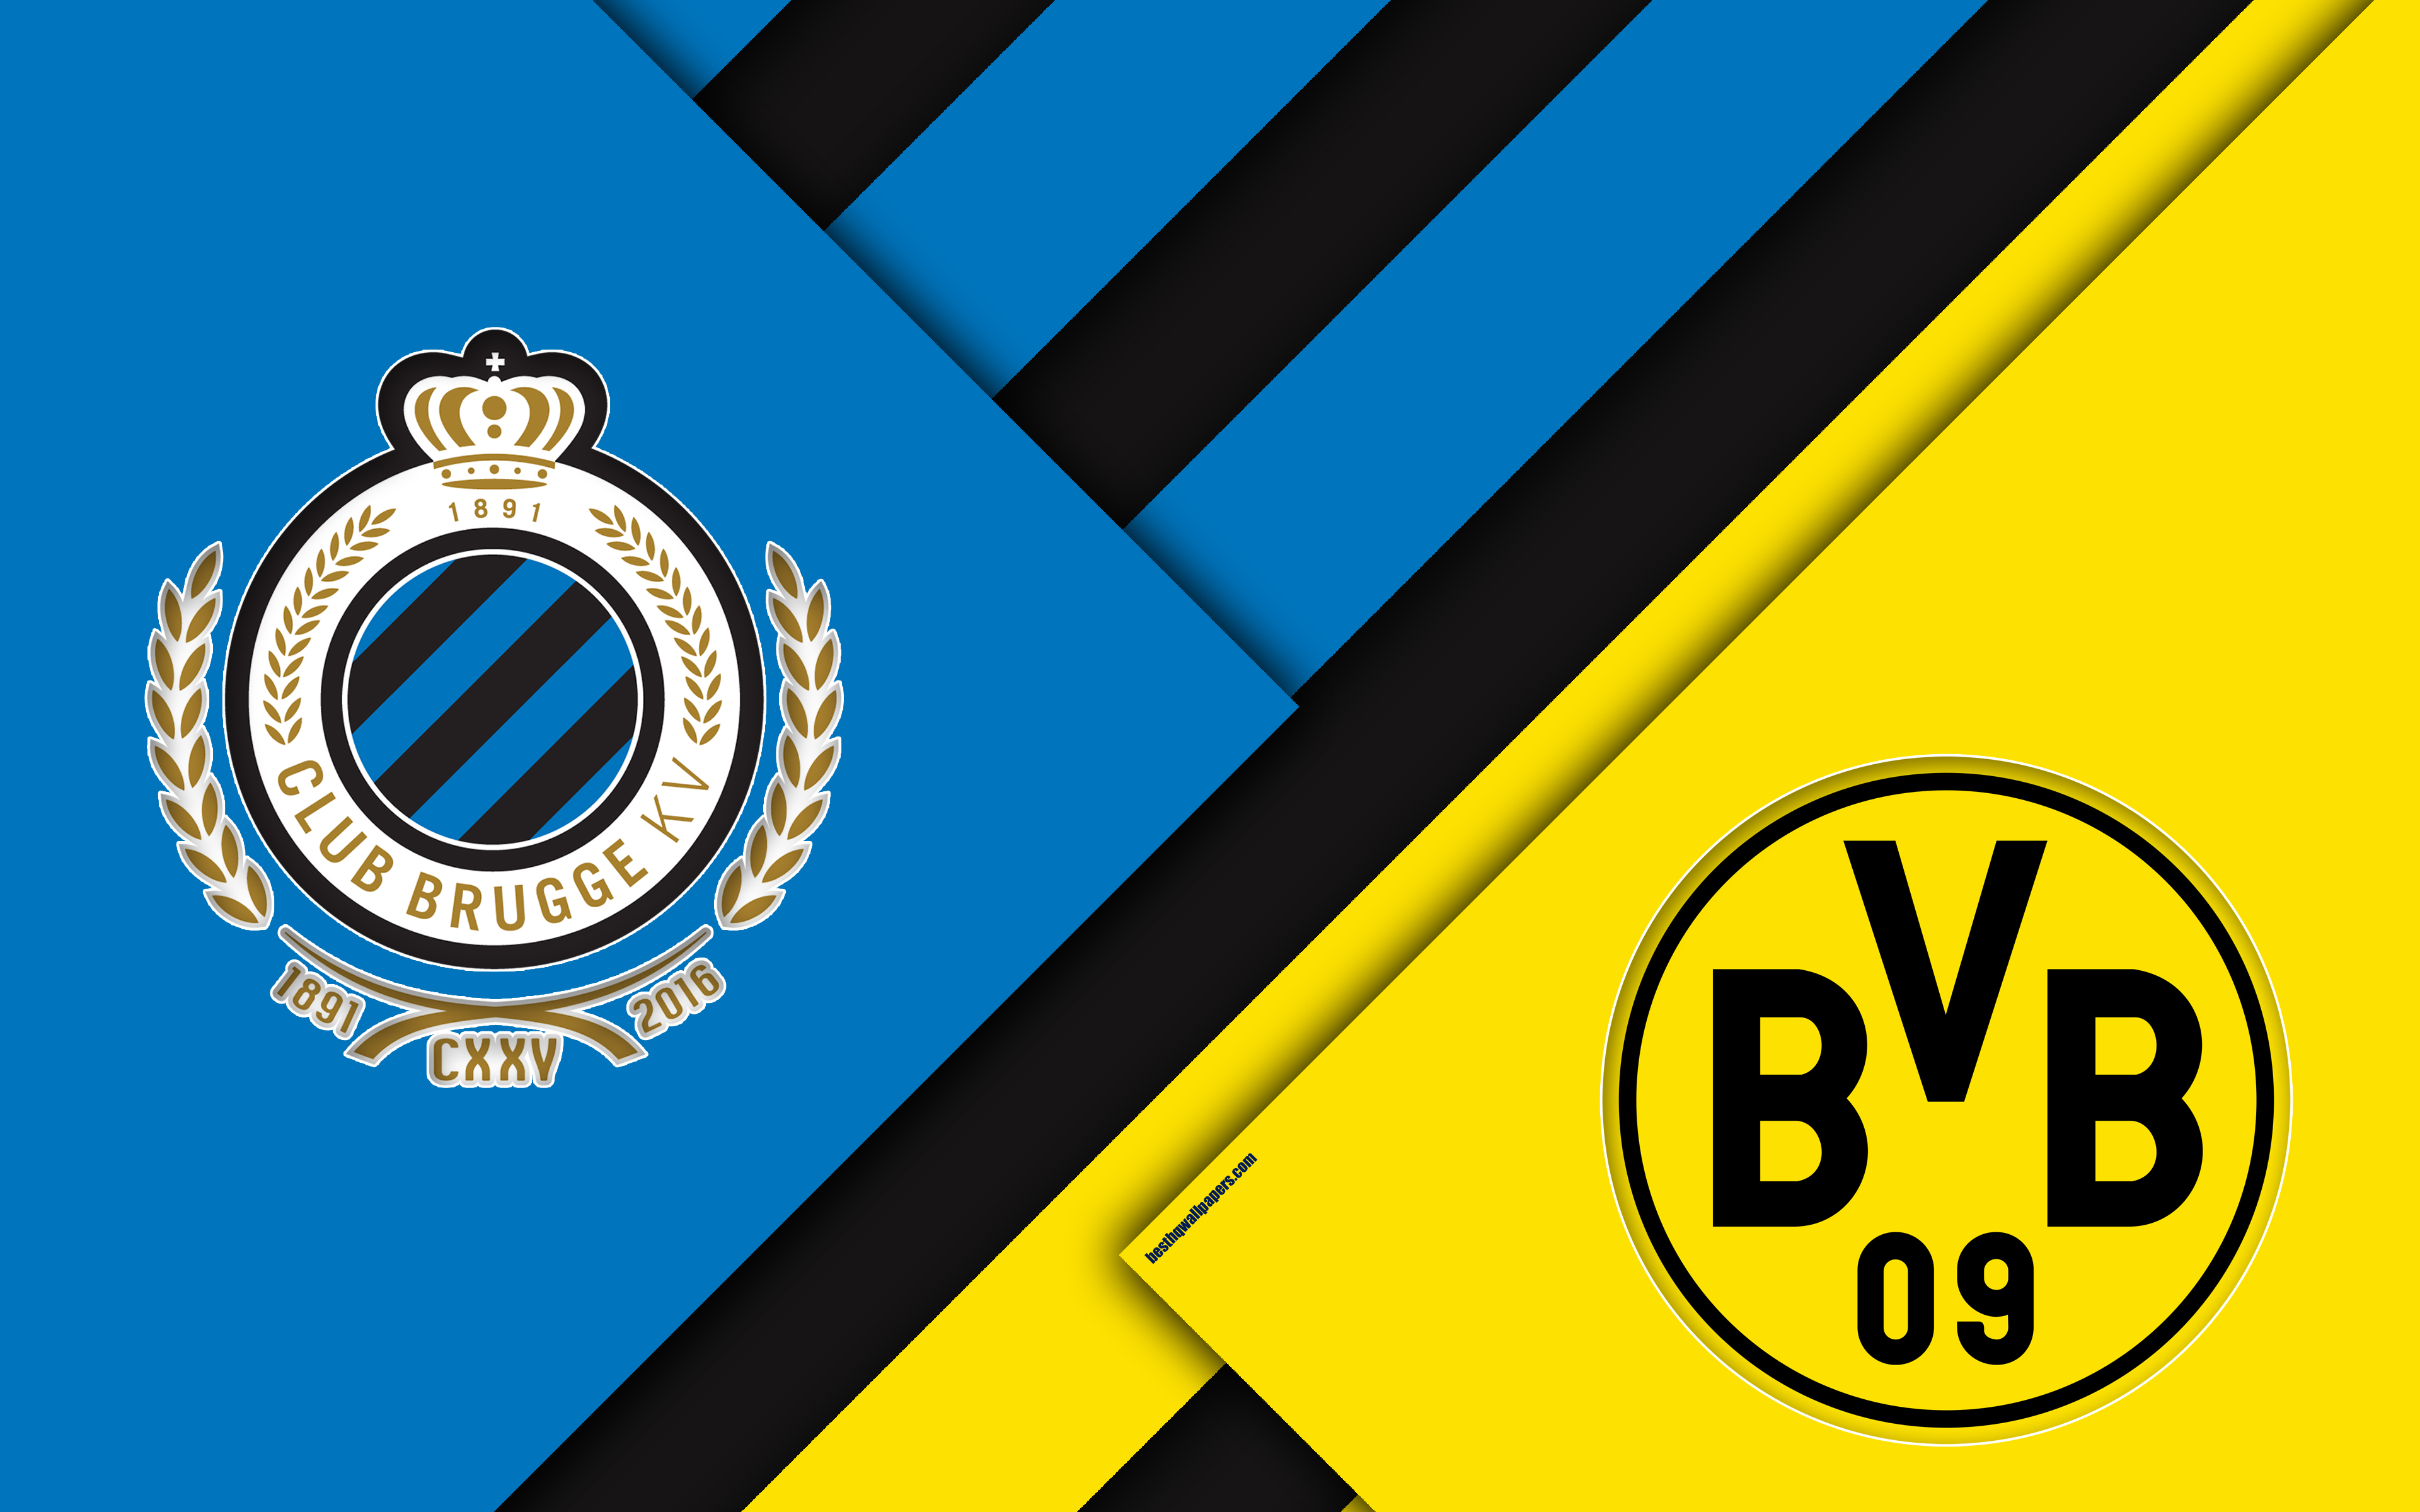 Download wallpaper Club Brugge KV vs Borussia Dortmund, material